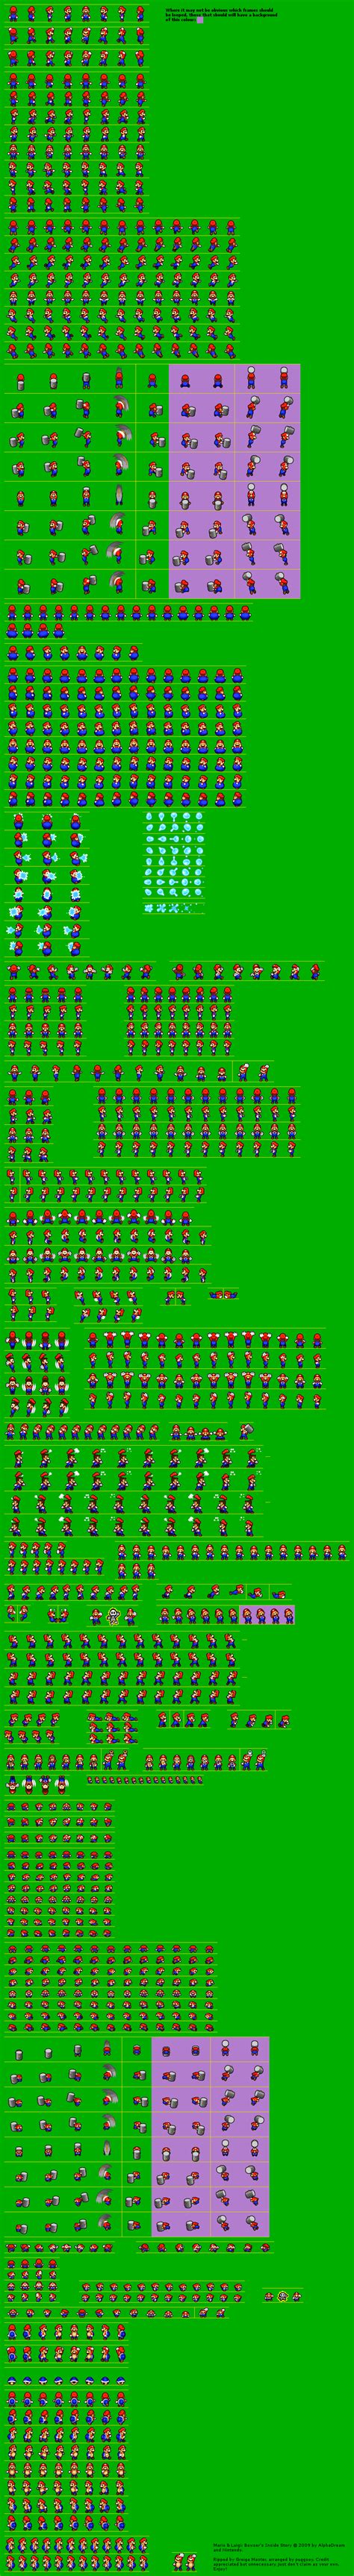 The Spriters Resource Full Sheet View Mario Luigi Bowser S Inside Story Mario Overworld